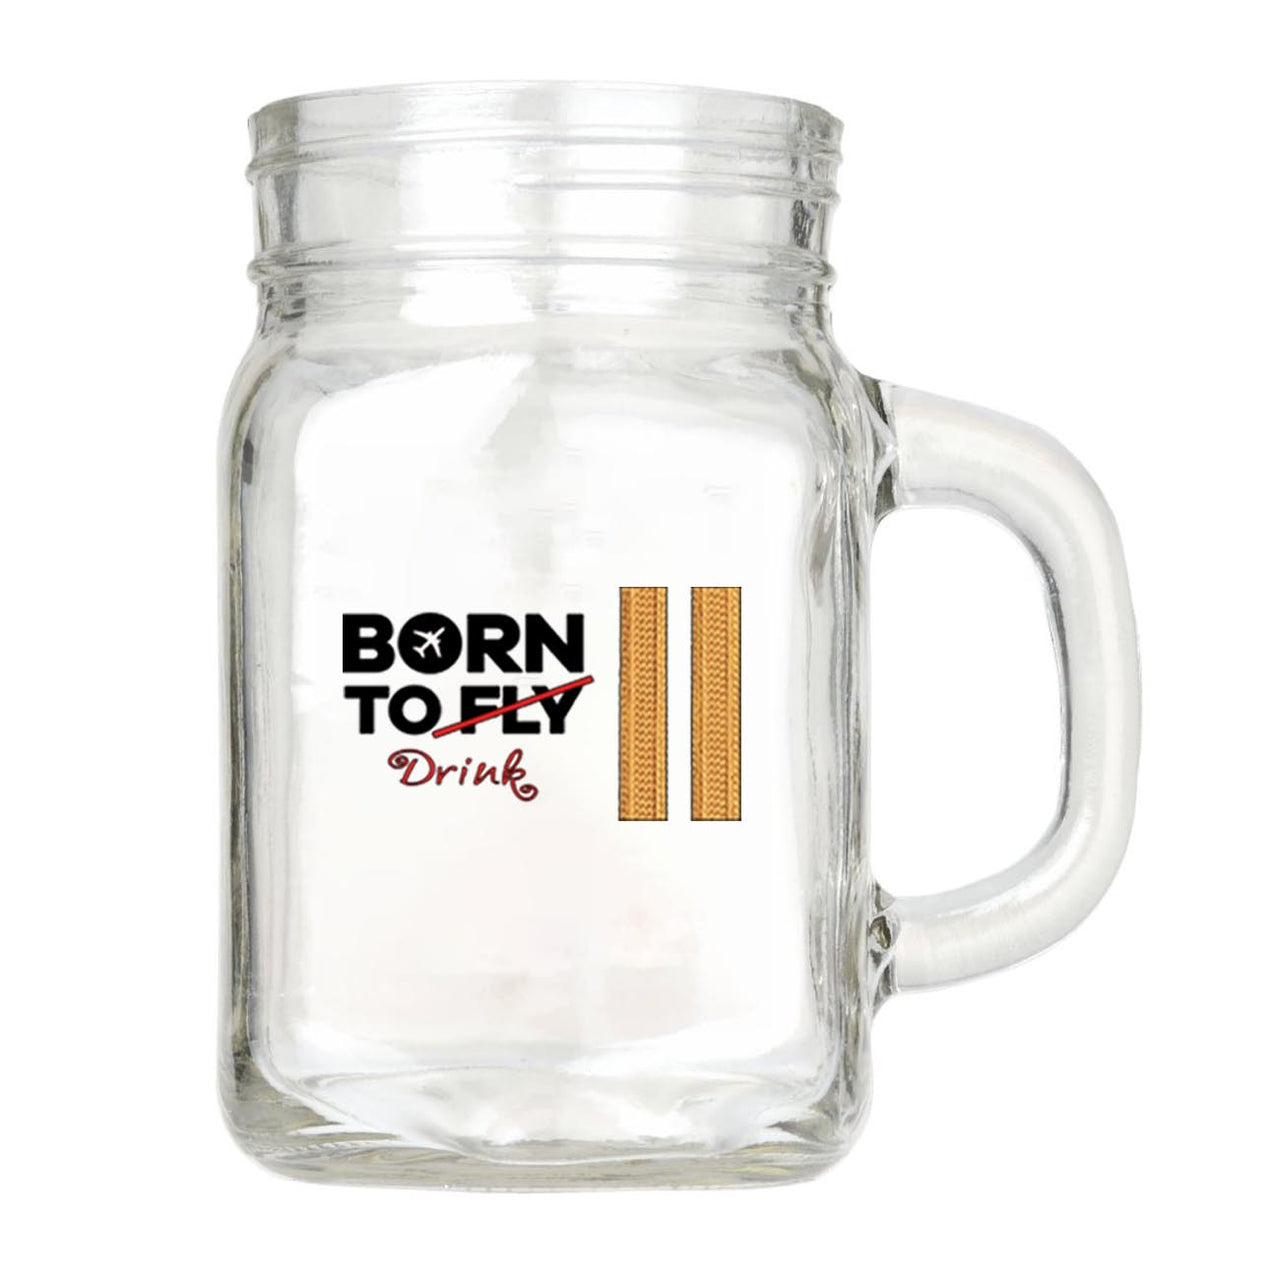 Born To Drink & 2 Lines Designed Cocktail Glasses